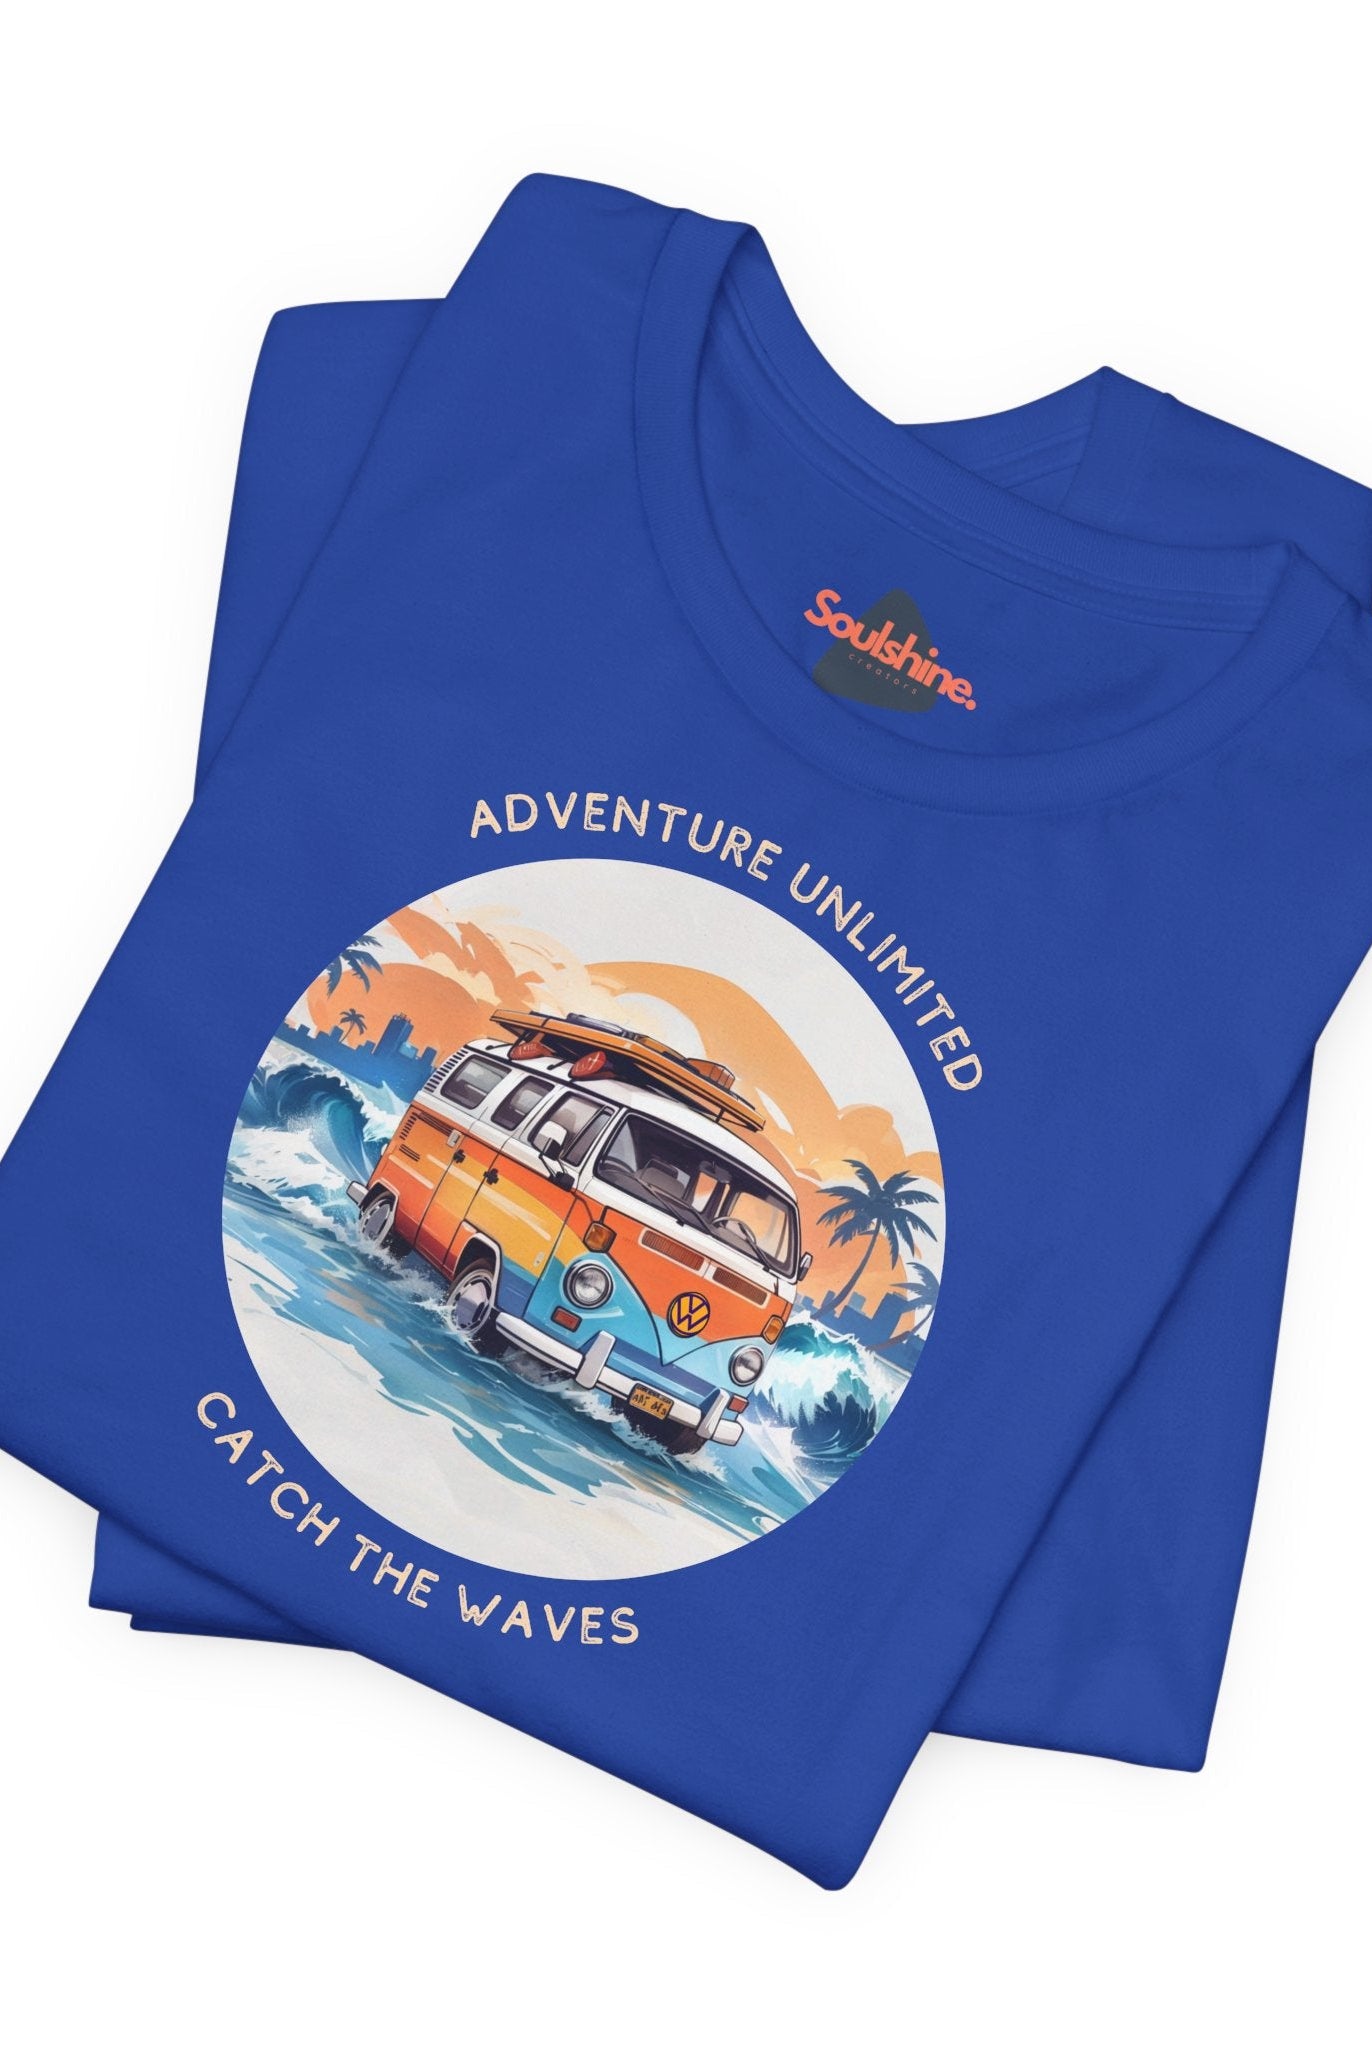 Adventure camper van printed on Adventure Unlimited Surfing T-Shirt